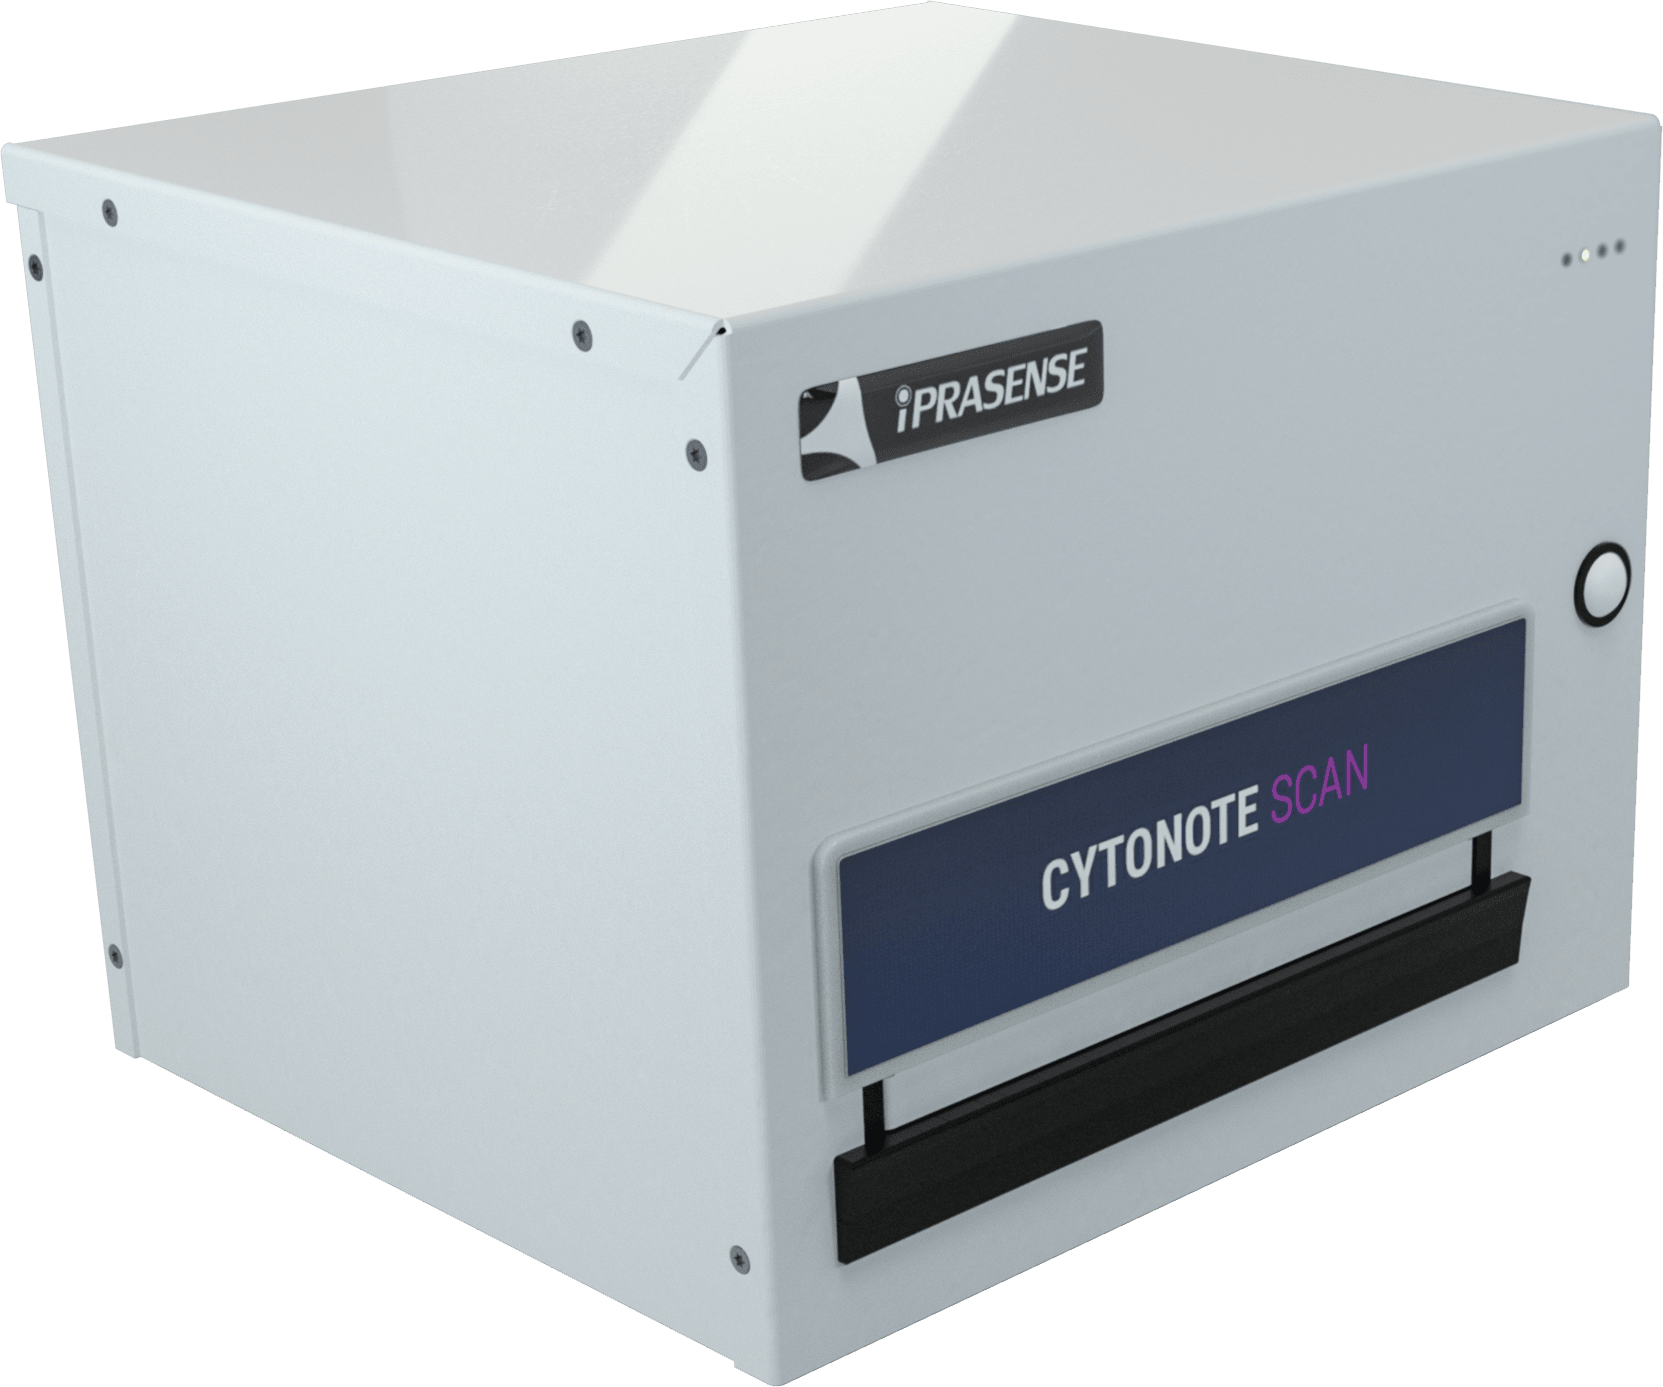 Cytonoye SCAN Live cell imaging